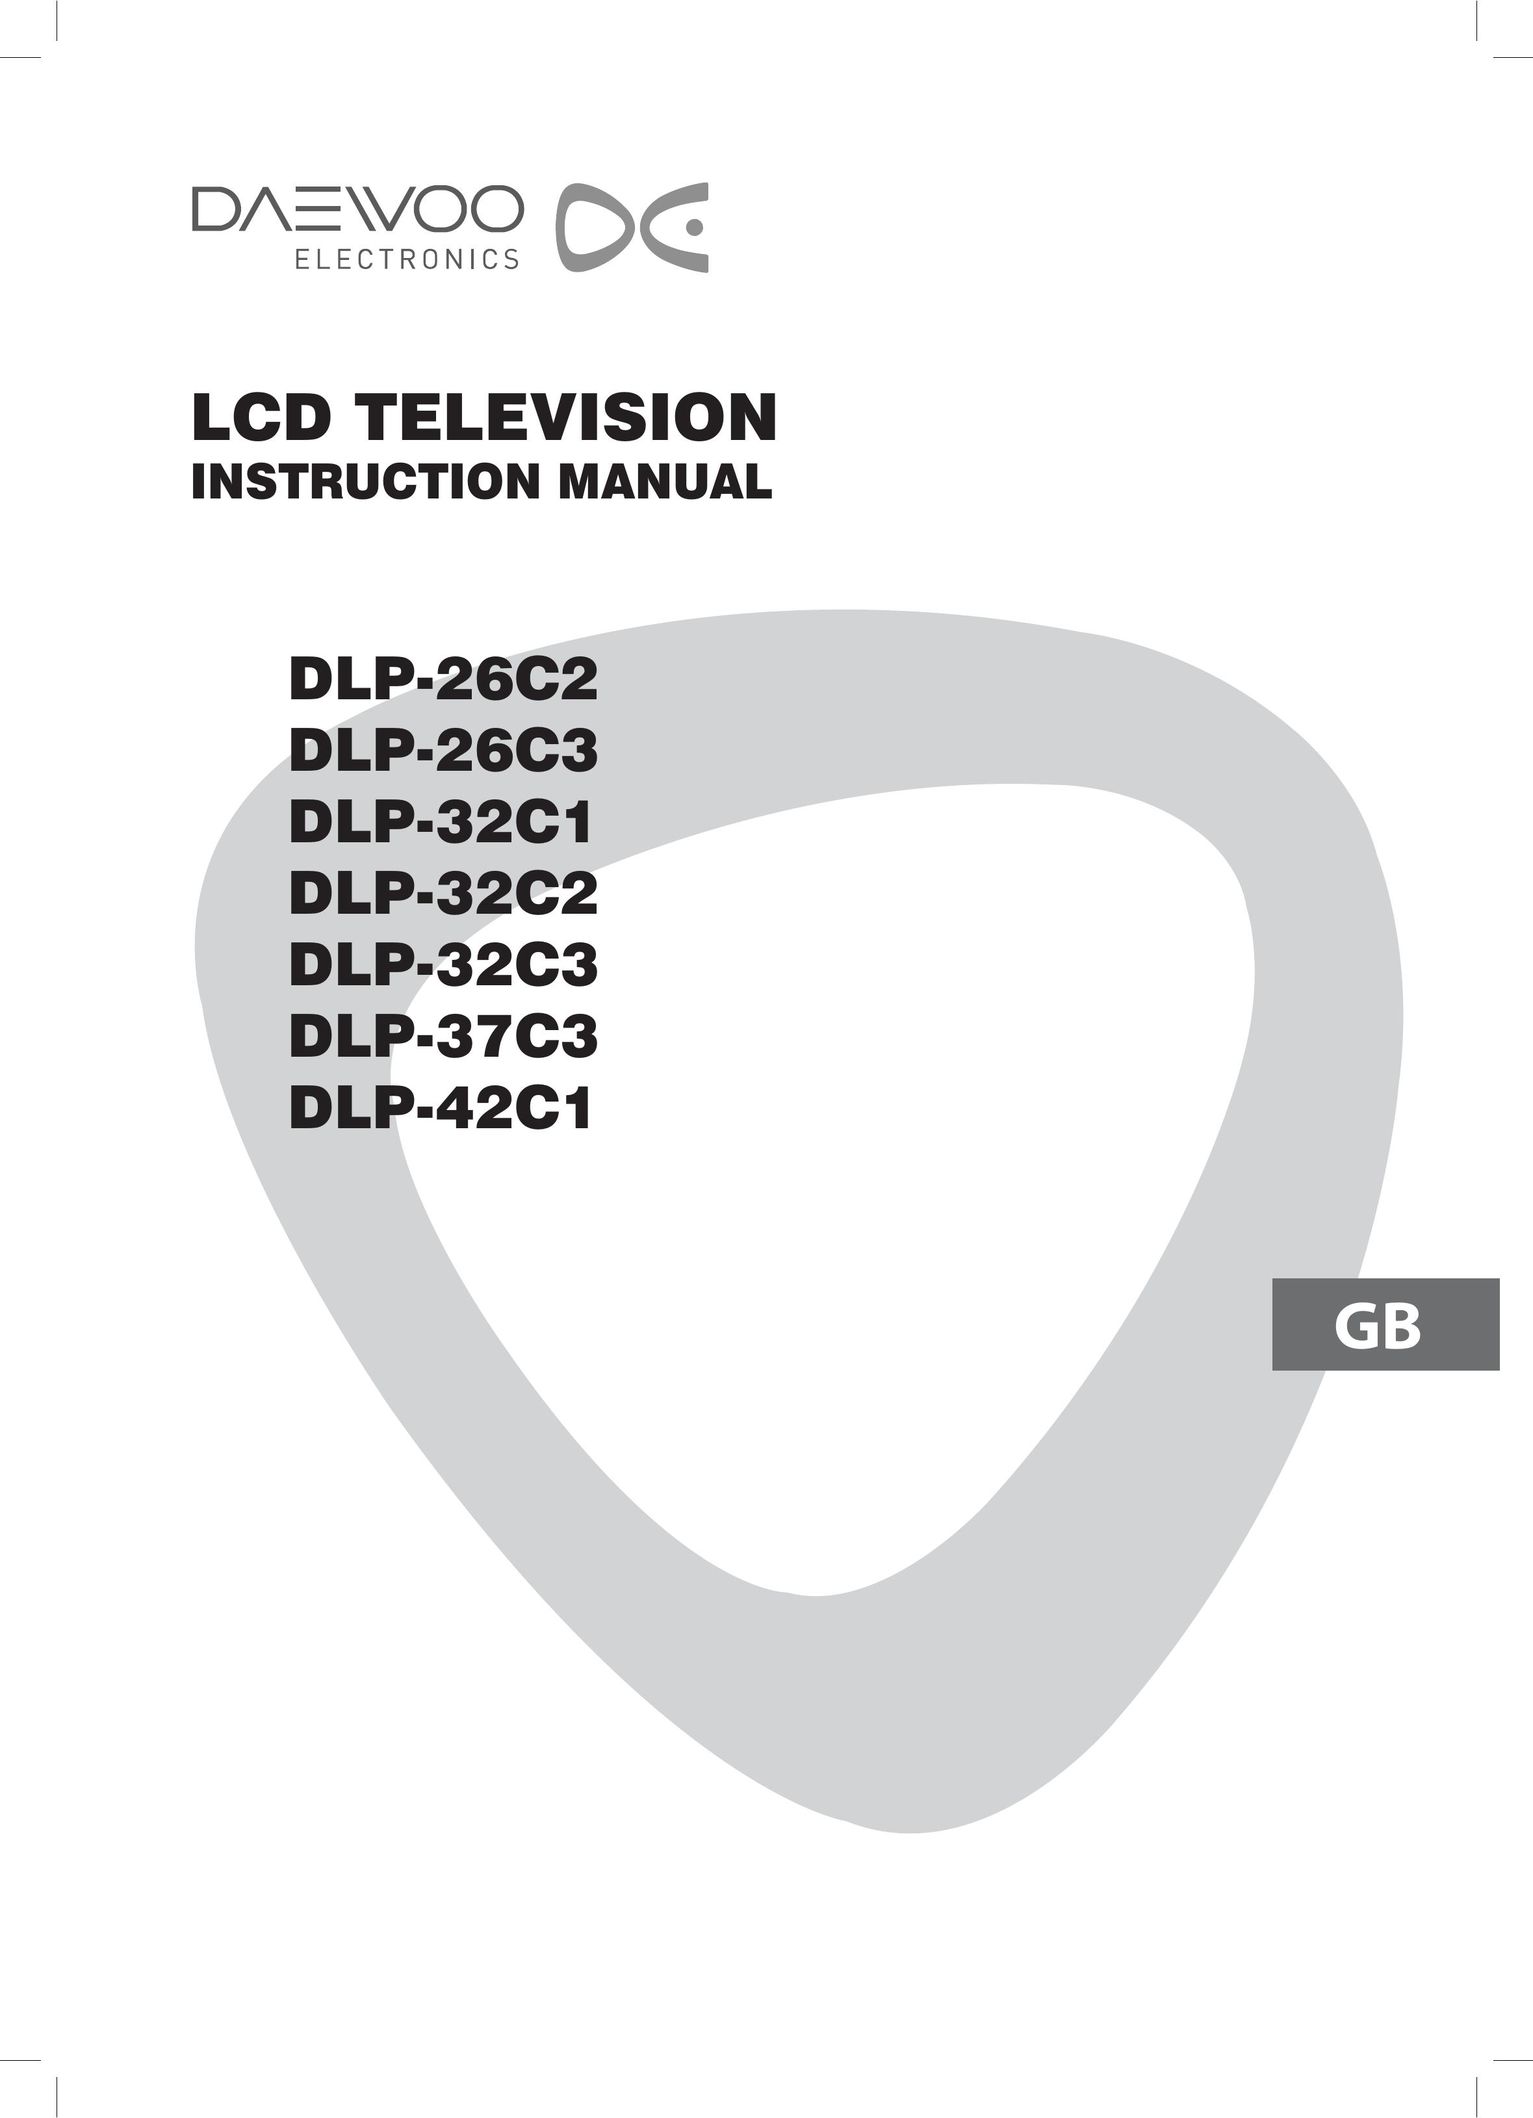 Daewoo DLP-32C1 Flat Panel Television User Manual